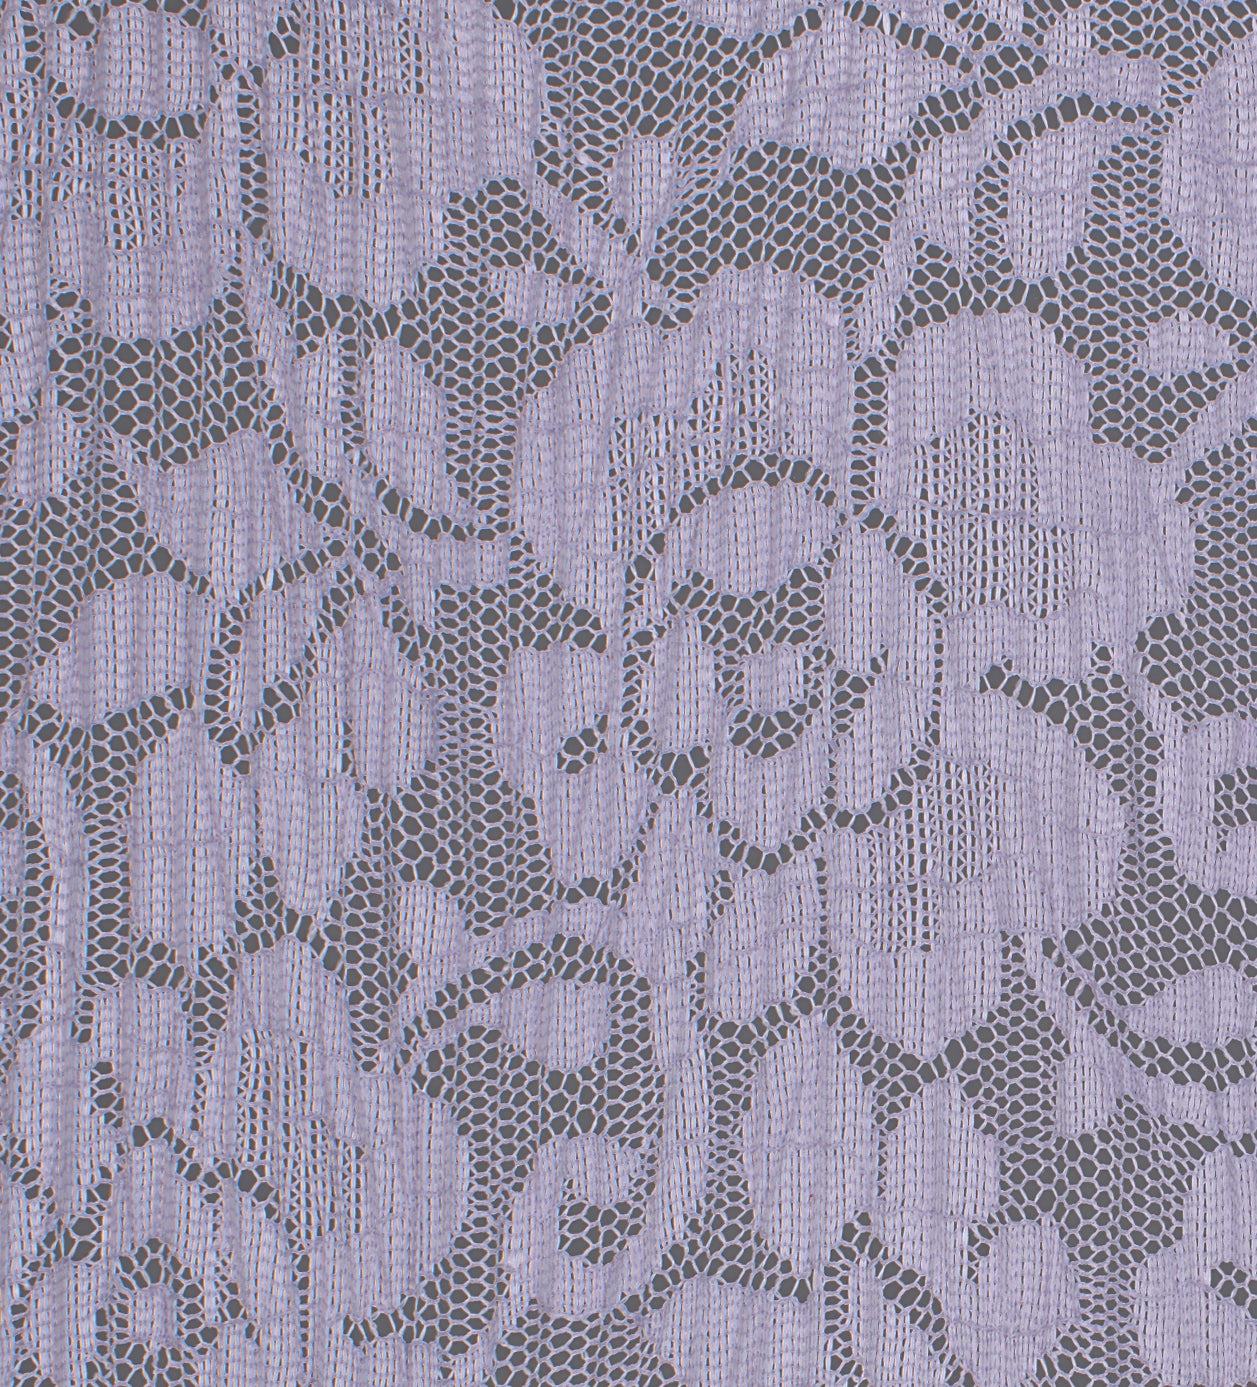 14005-02 Light Purple Pleat Floral Pattern Lace Plain Dyed Blend blend floral knit lace plain dyed pleat polyester purple spandex Lace, Pleat - knit fabric - woven fabric - fabric company - fabric wholesale - fabric b2b - fabric factory - high quality fabric - hong kong fabric - fabric hk - acetate fabric - cotton fabric - linen fabric - metallic fabric - nylon fabric - polyester fabric - spandex fabric - chun wing hing - cwh hk - fabric worldwide ship - 針織布 - 梳織布 - 布料公司- 布料批發 - 香港布料 - 秦榮興